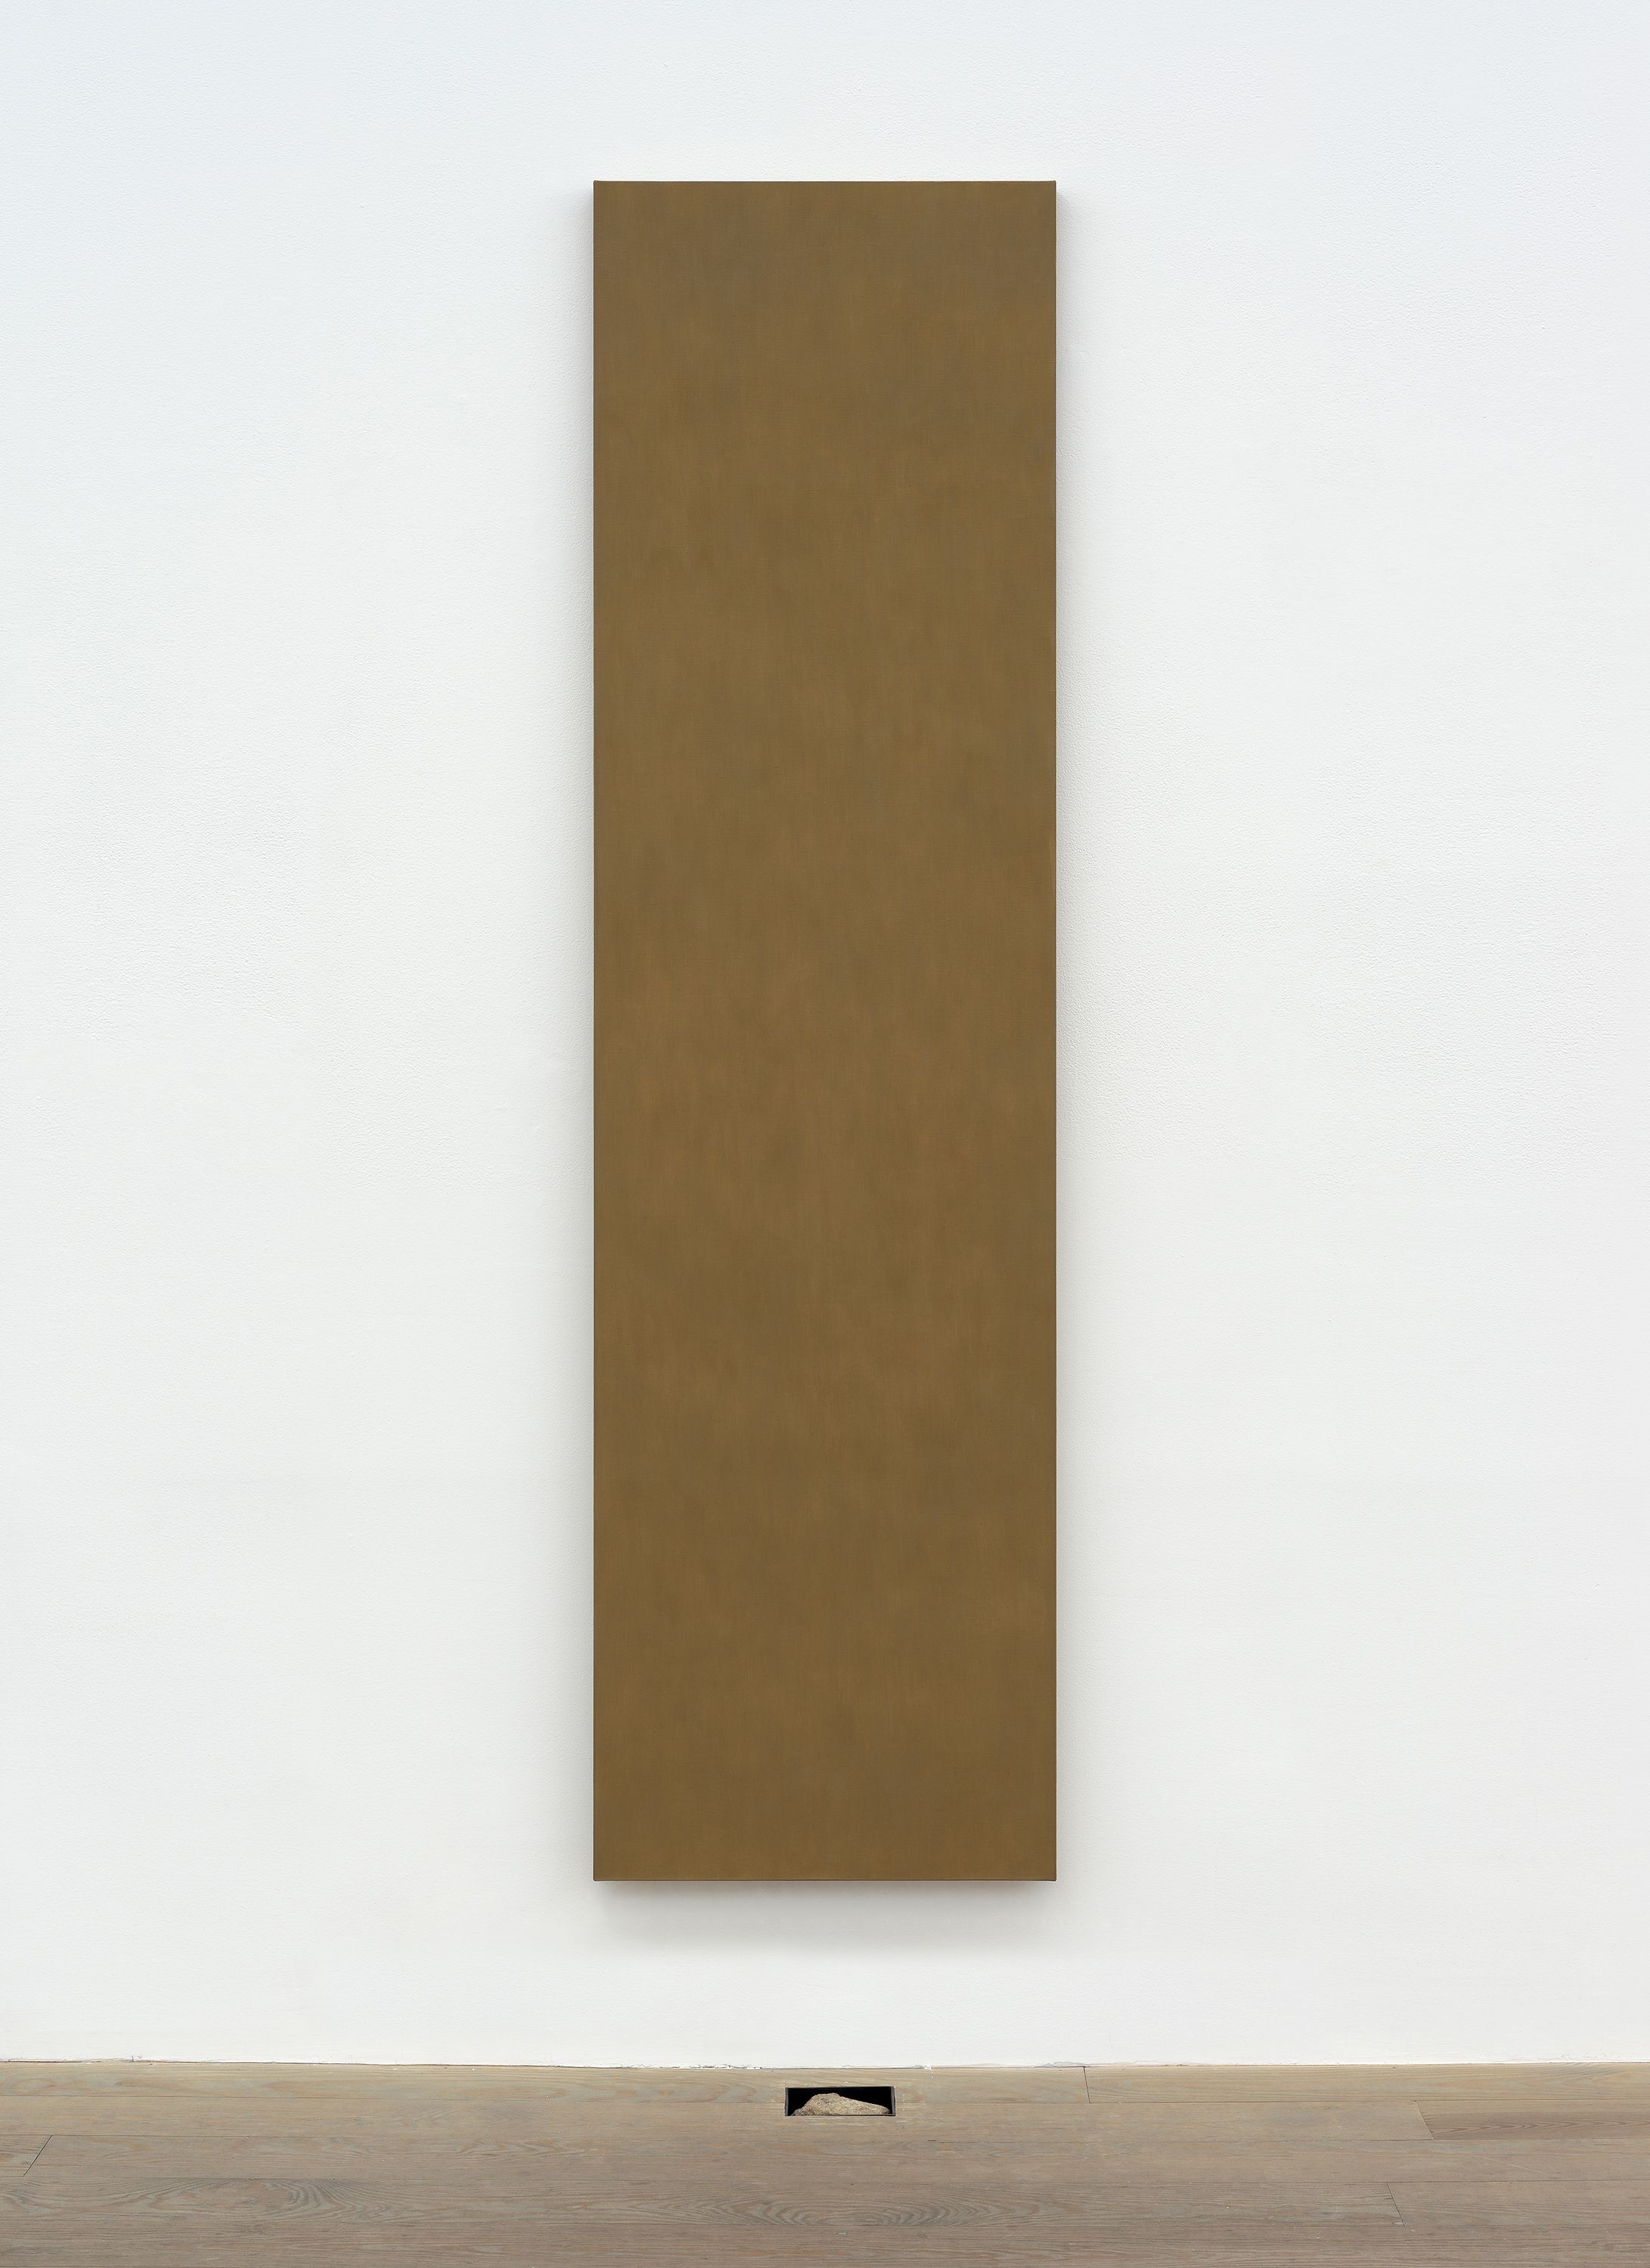 Michael Wang, Barcelona, 2015, Barcelona sandstone, binder, linen, 70 x 19 and 6 x 3 15/16 x 3 3/8 in.